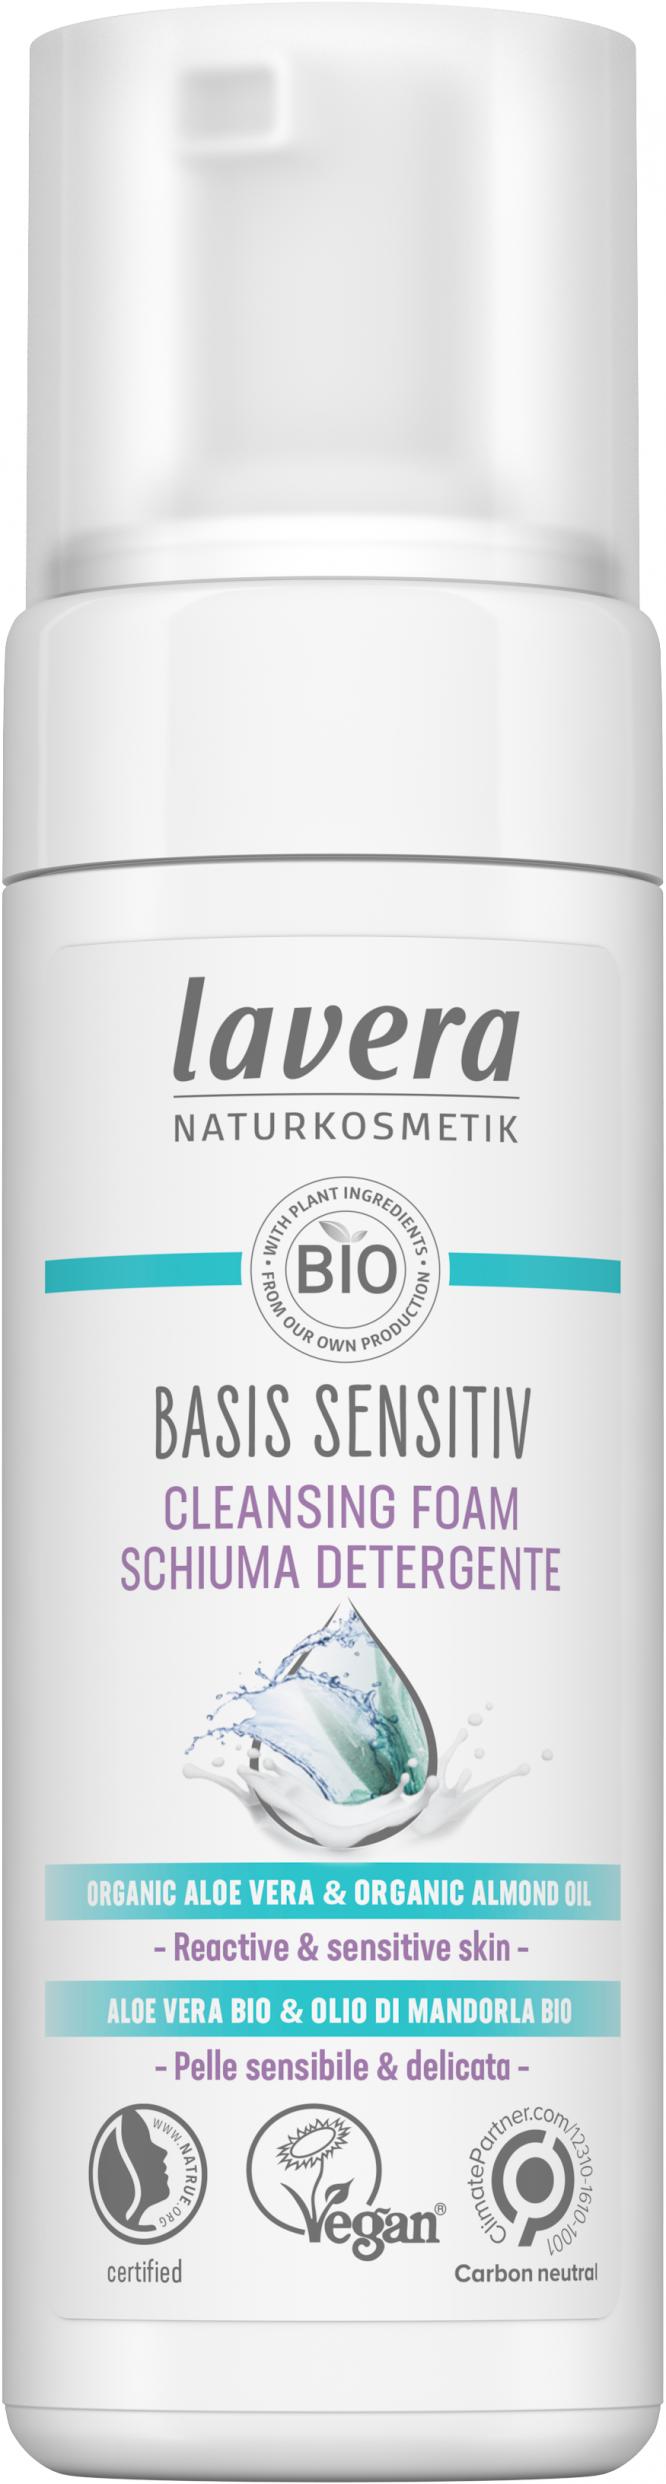 Basis Sensitiv Cleansing Foam 150ml